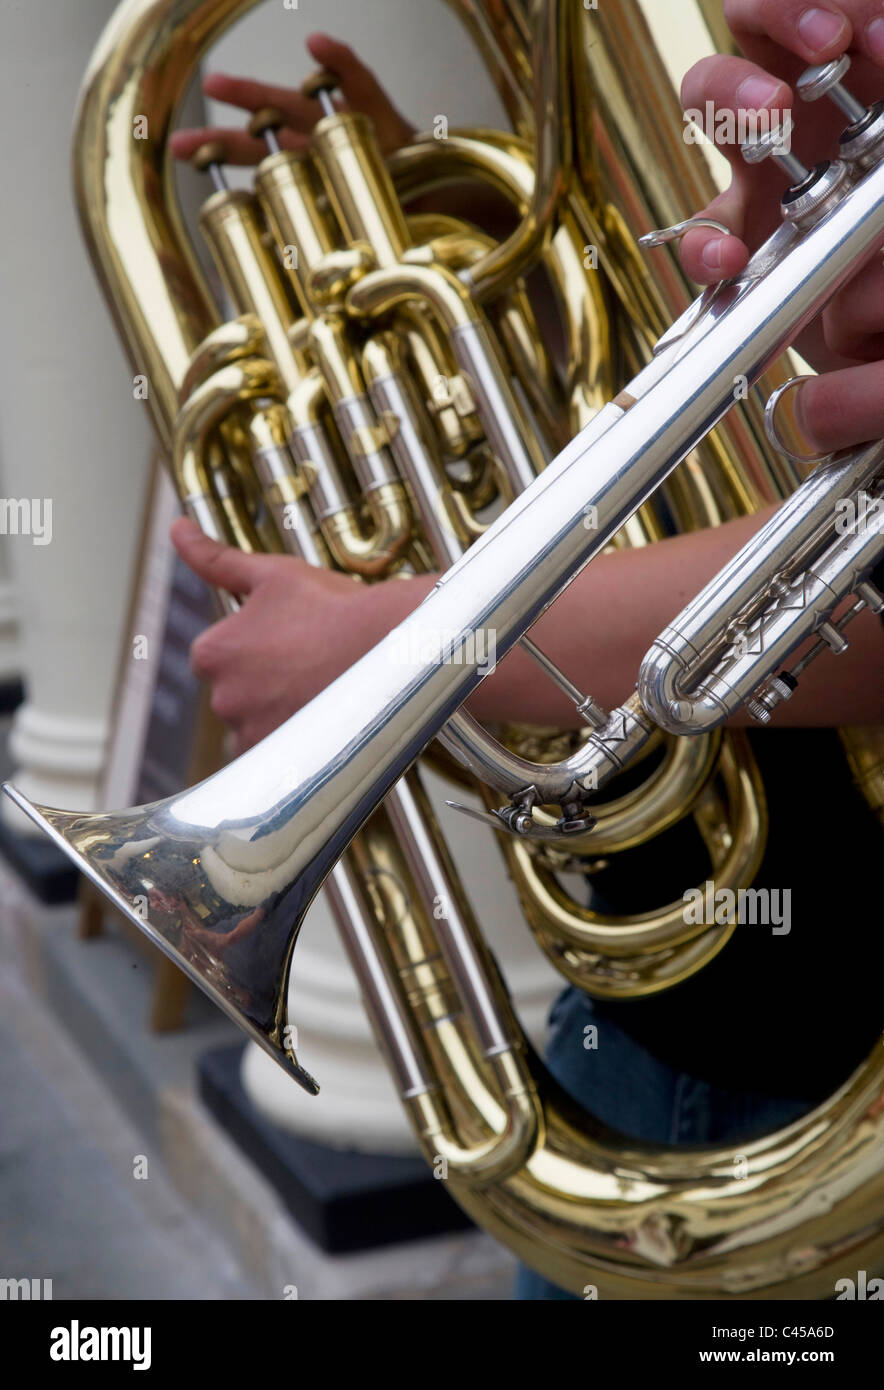 Brass Instruments Tuba Stock Photos & Brass Instruments Tuba Stock ...